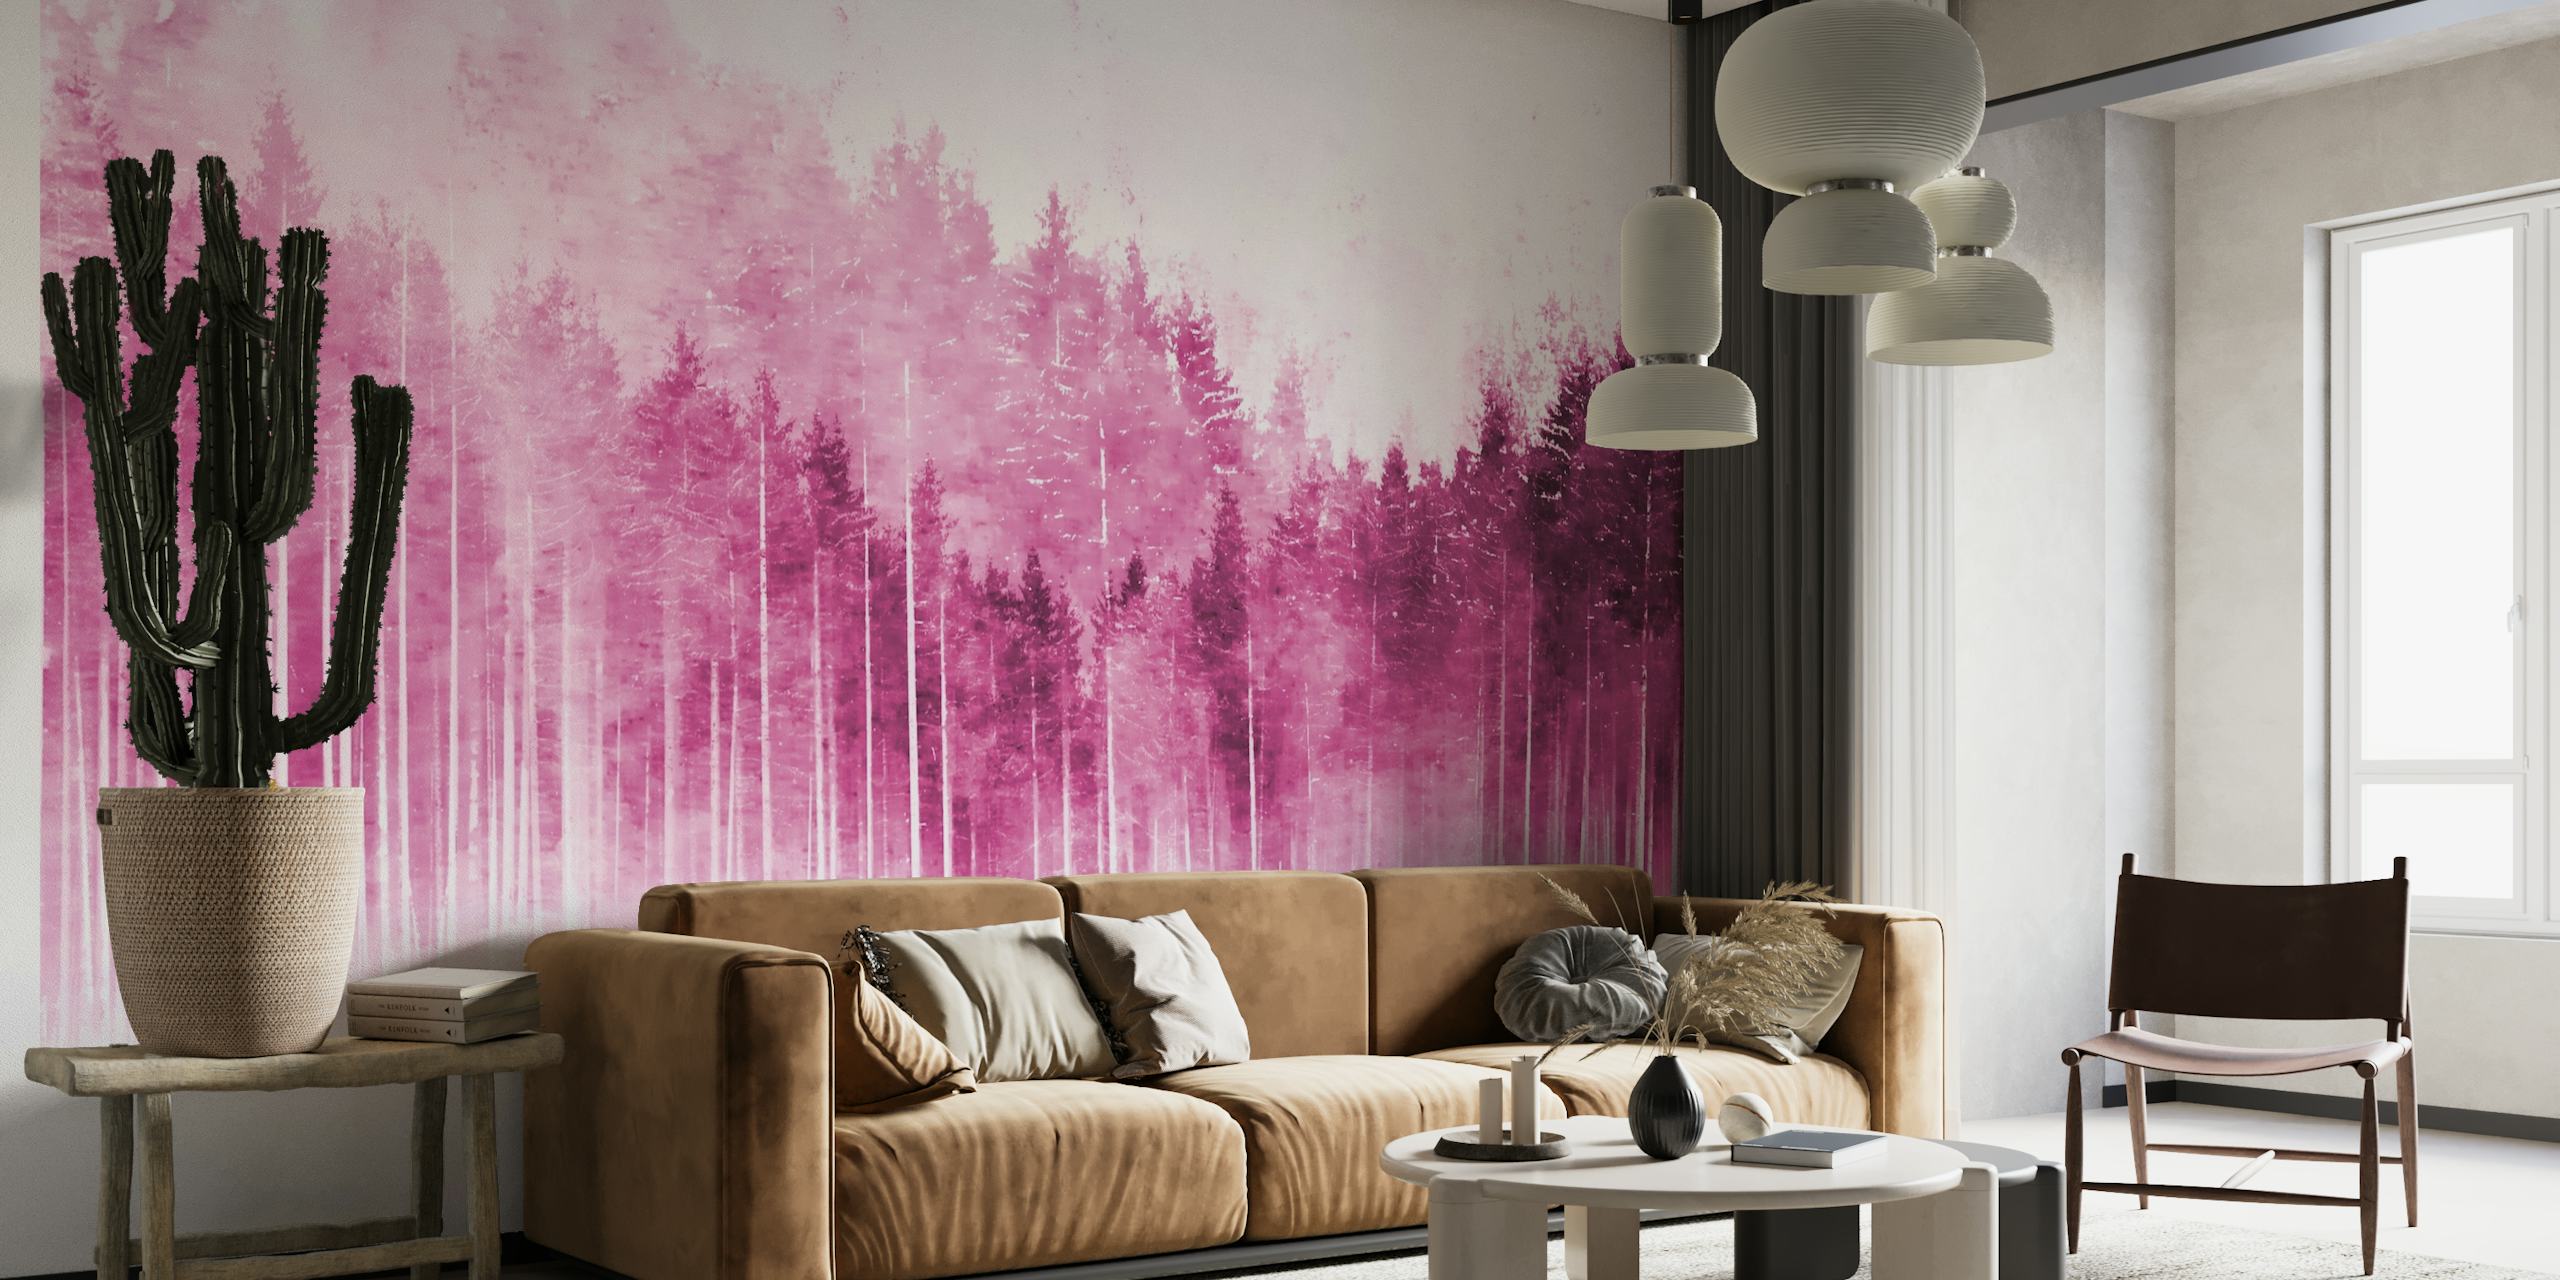 Magenta dennenbos silhouet muurschildering op happywall.com